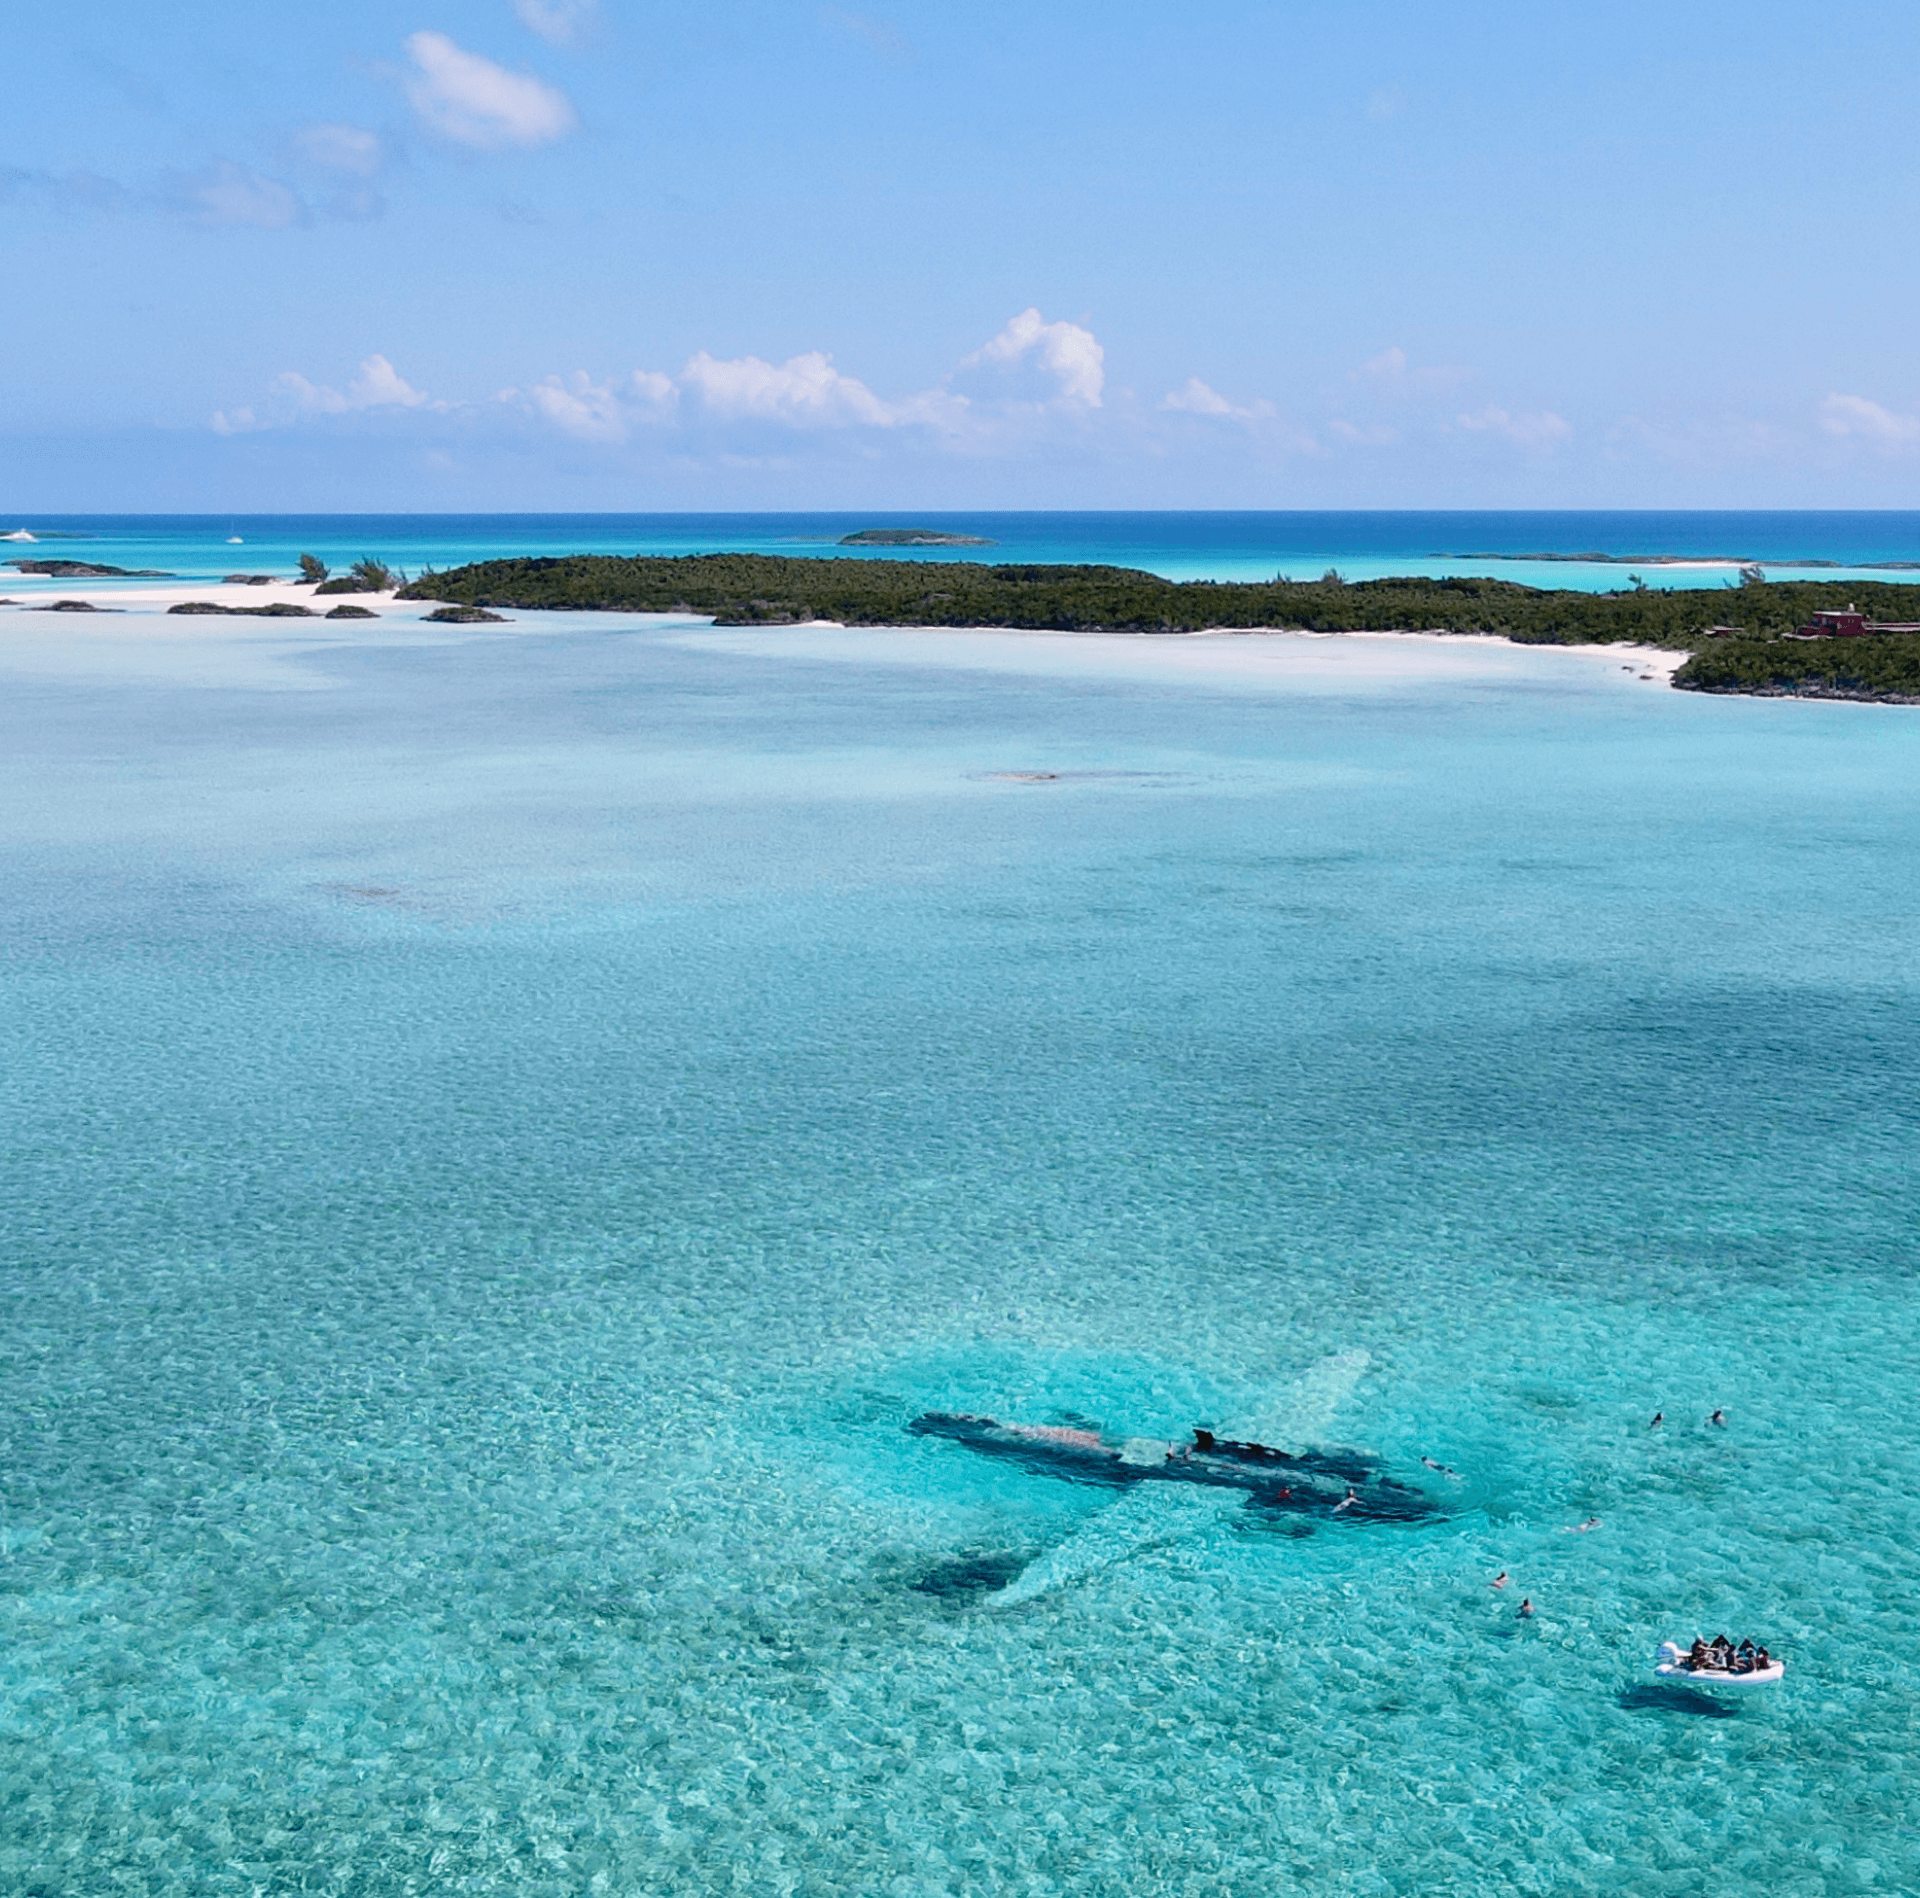 The water of Bahamas island